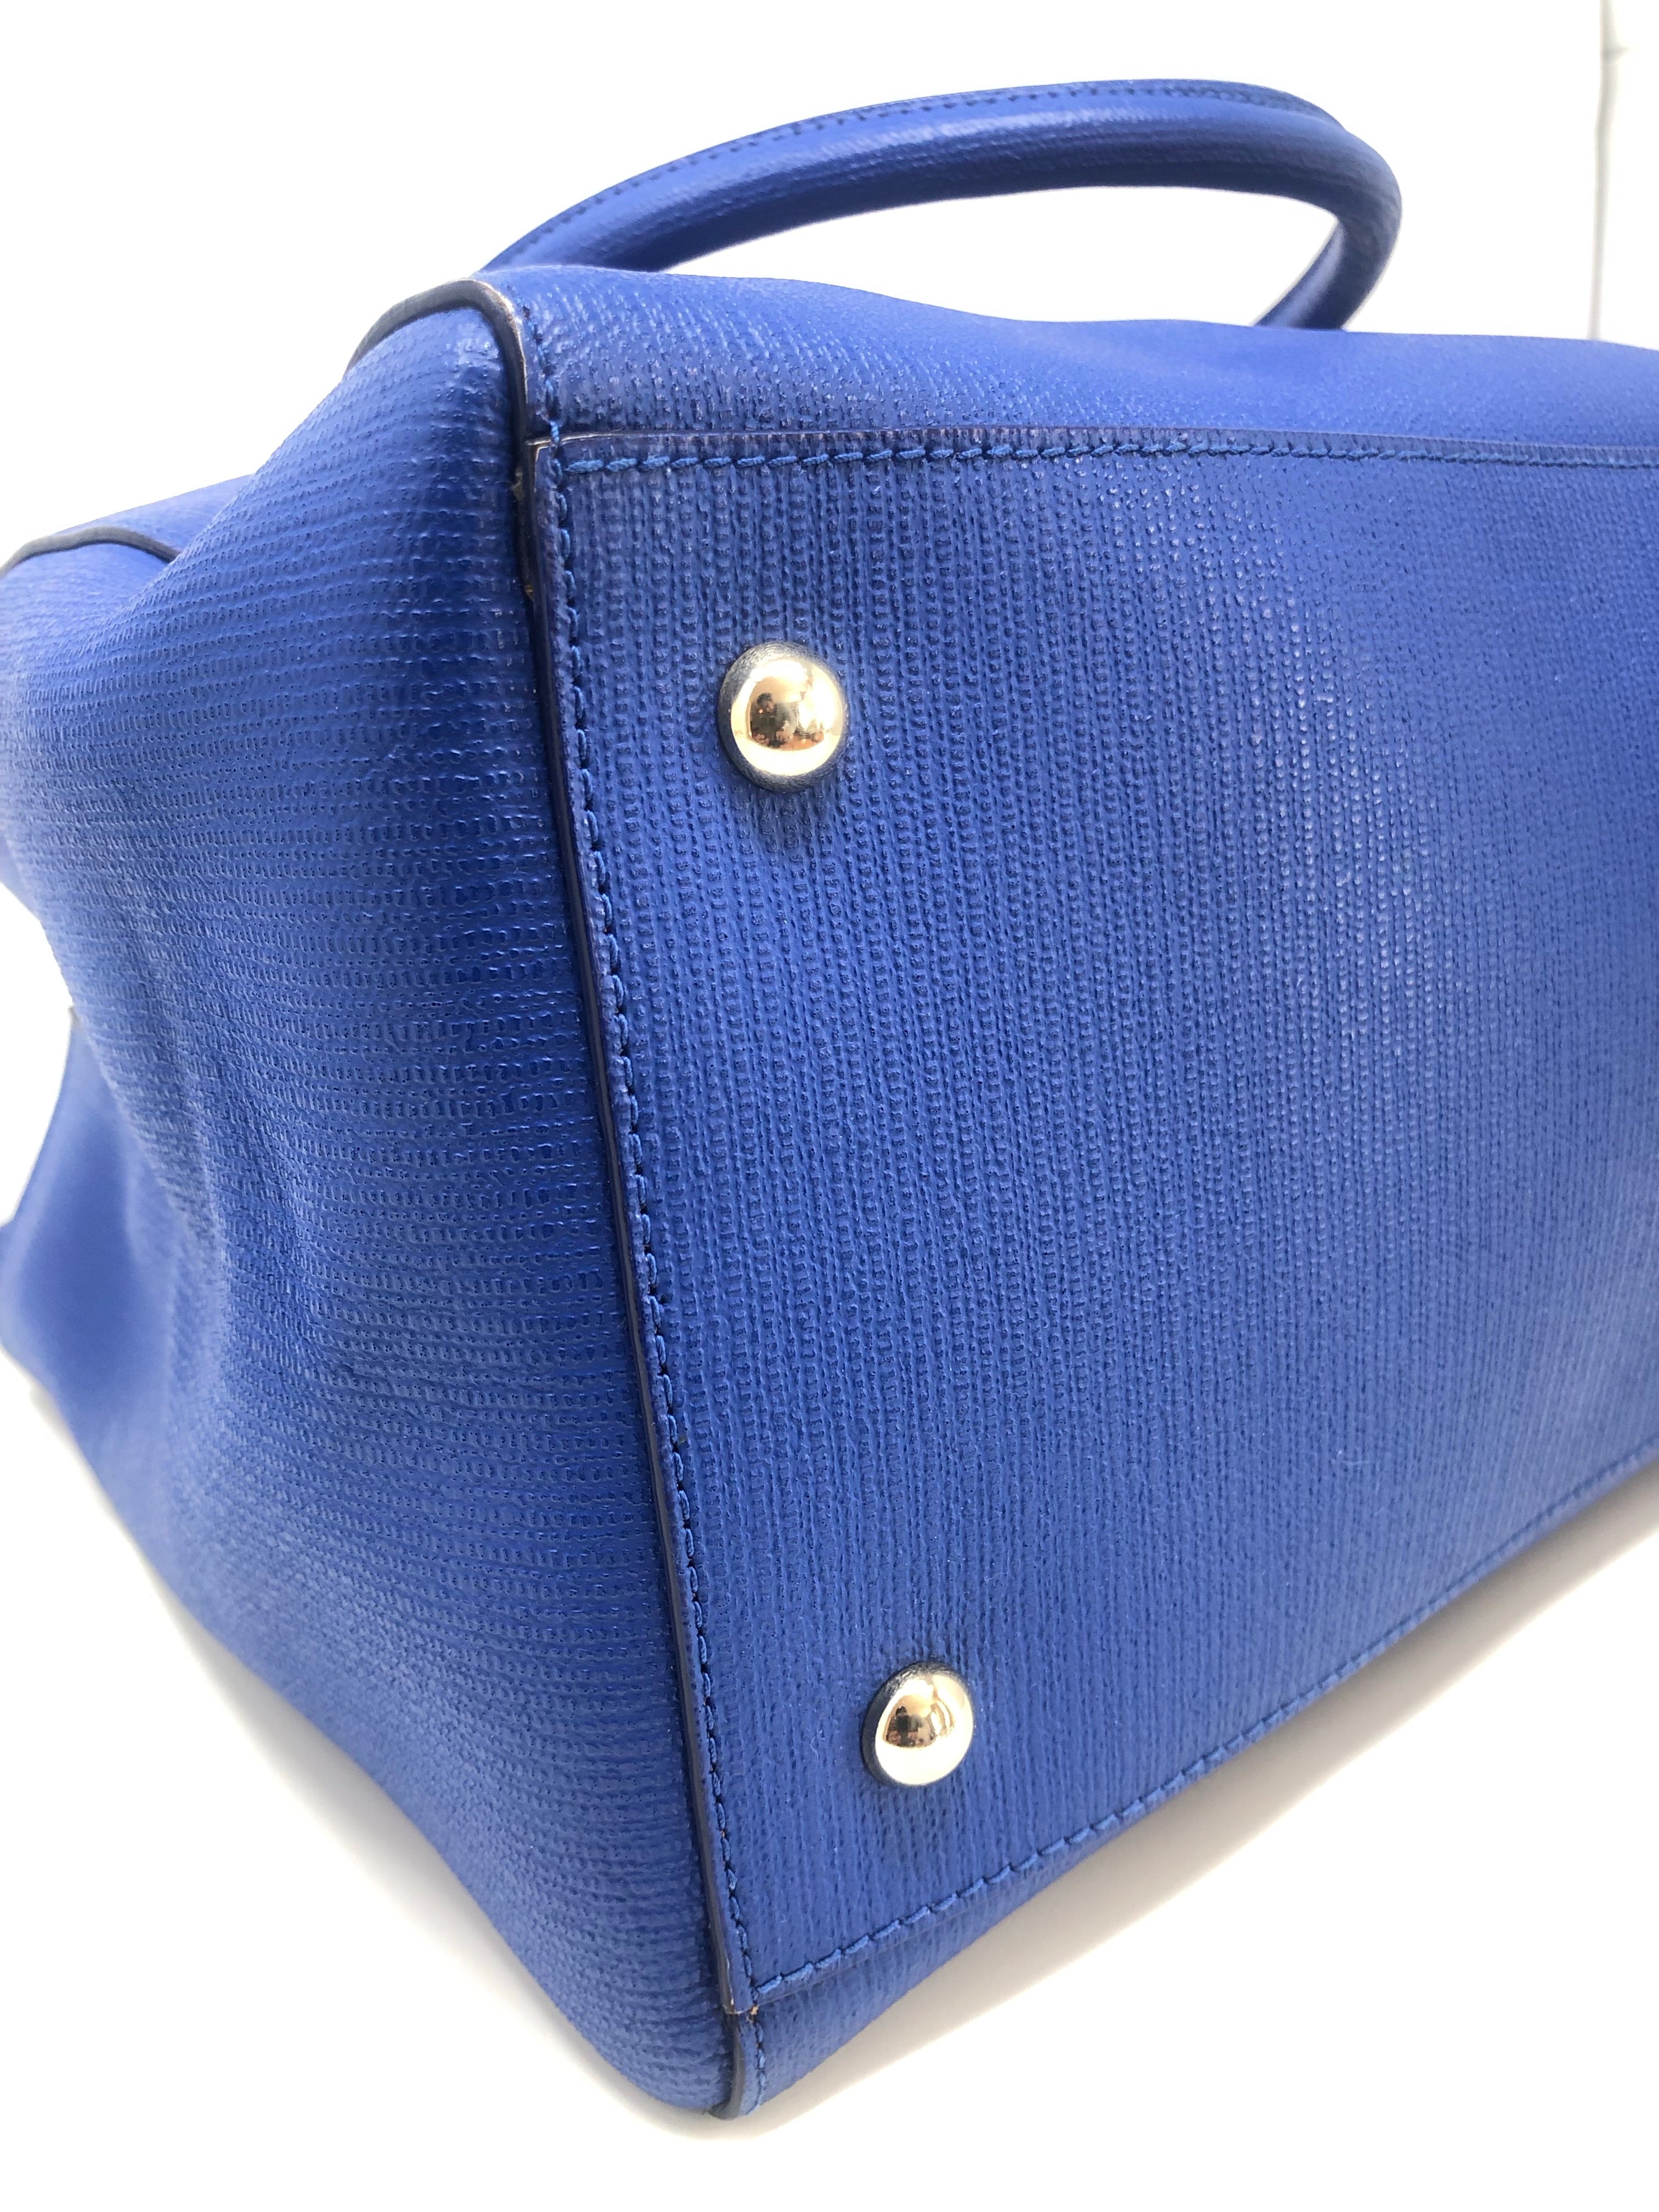 NWT FURLA Ocean Blue Saffiano Leather Small Jucca Stitch Tote Bag